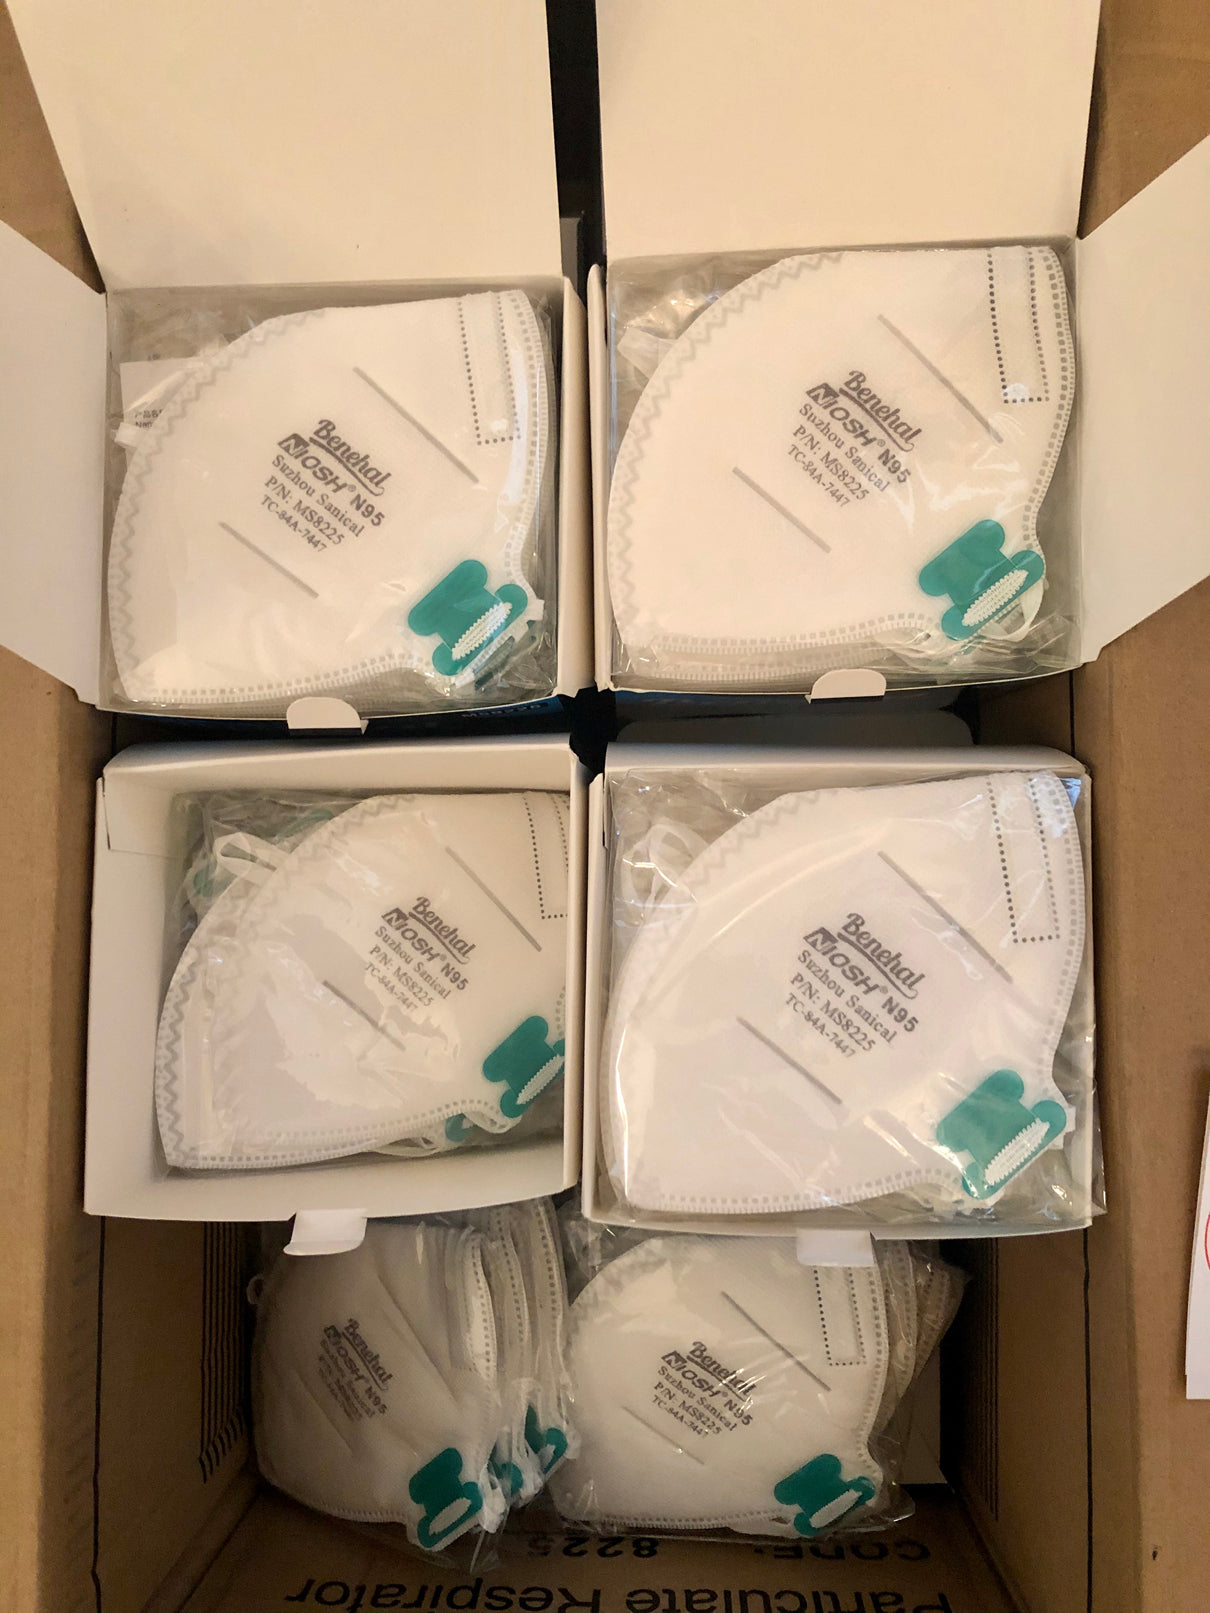 Benehal N95 Respirator masks in packaging in boxes